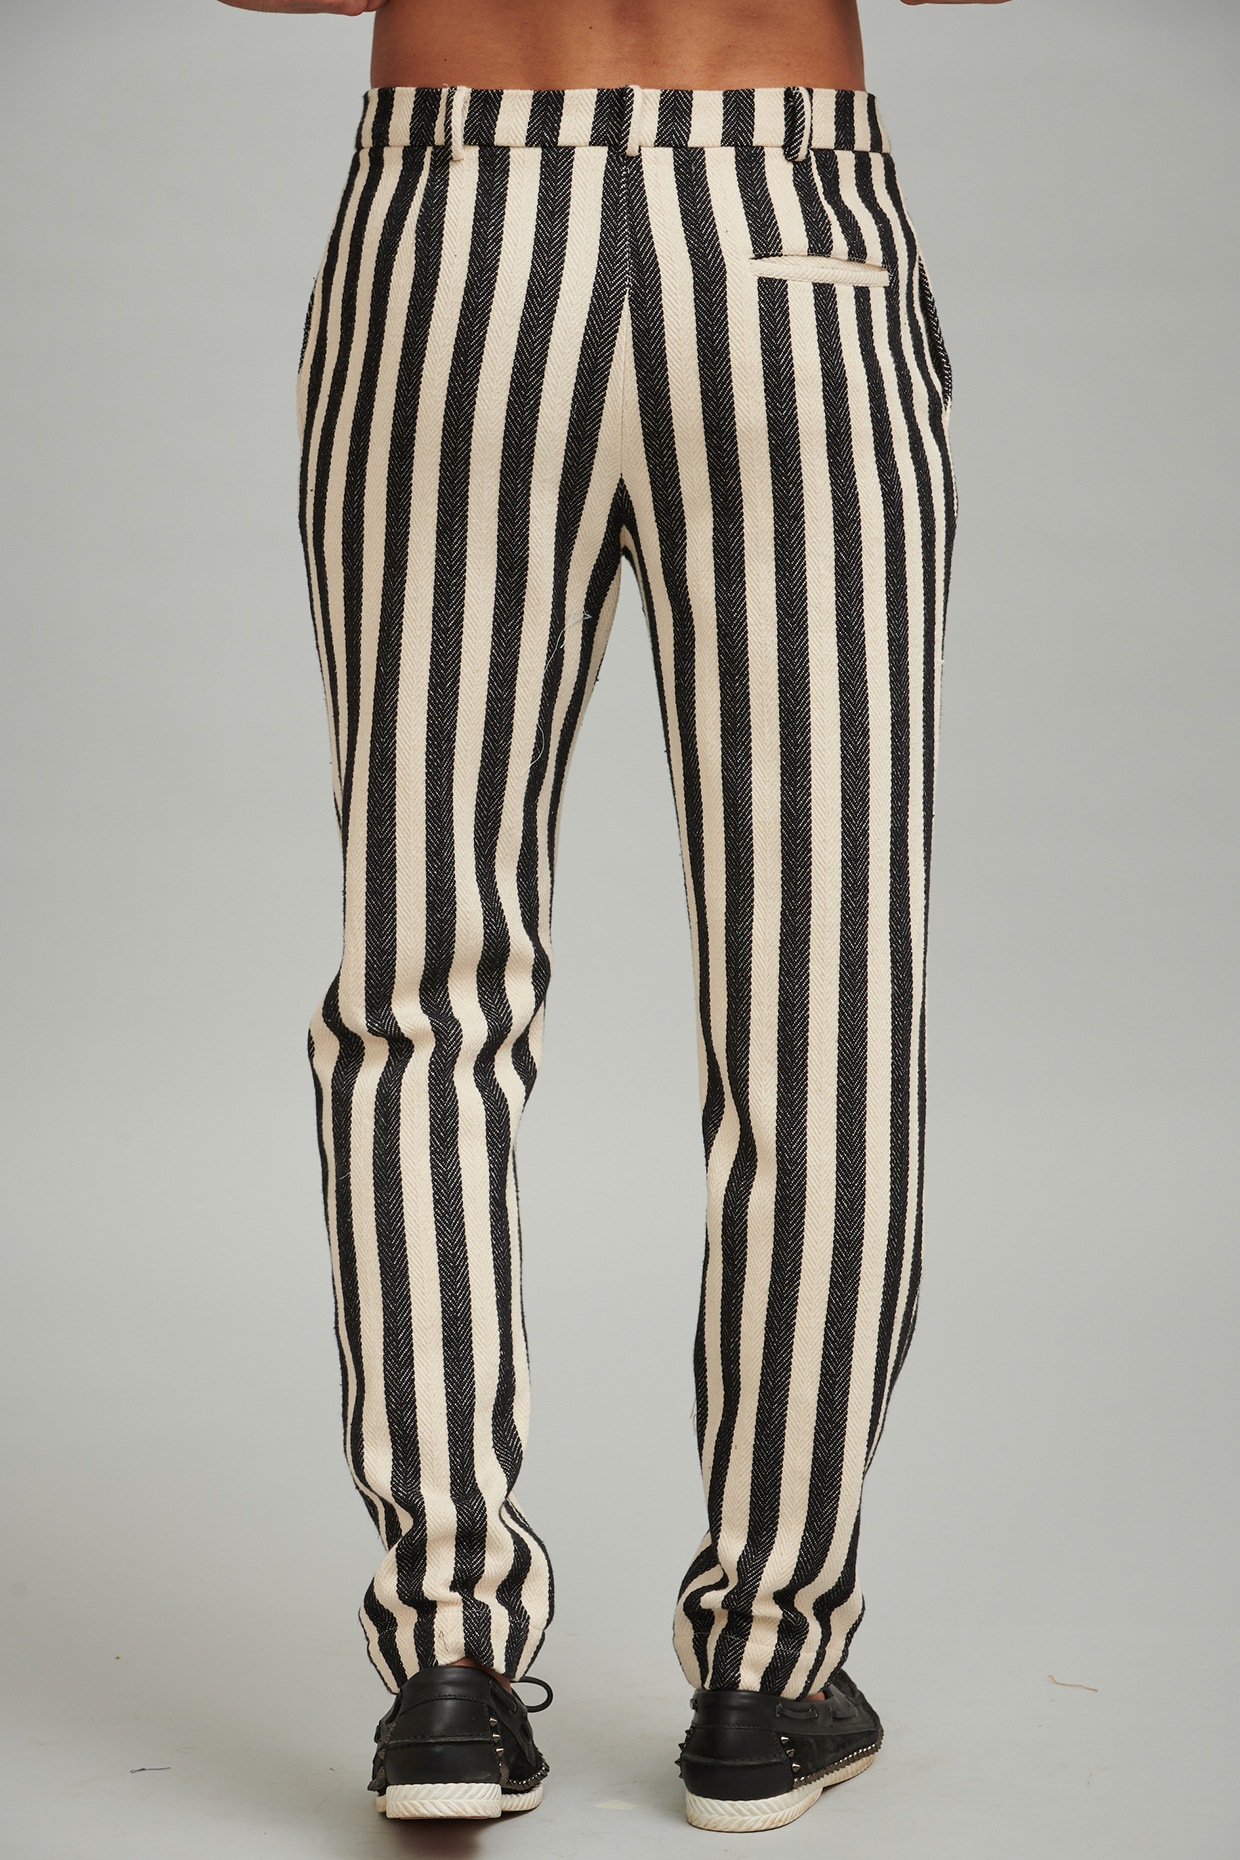 Men S Vertical Striped Pants  Casual Pants  AliExpress